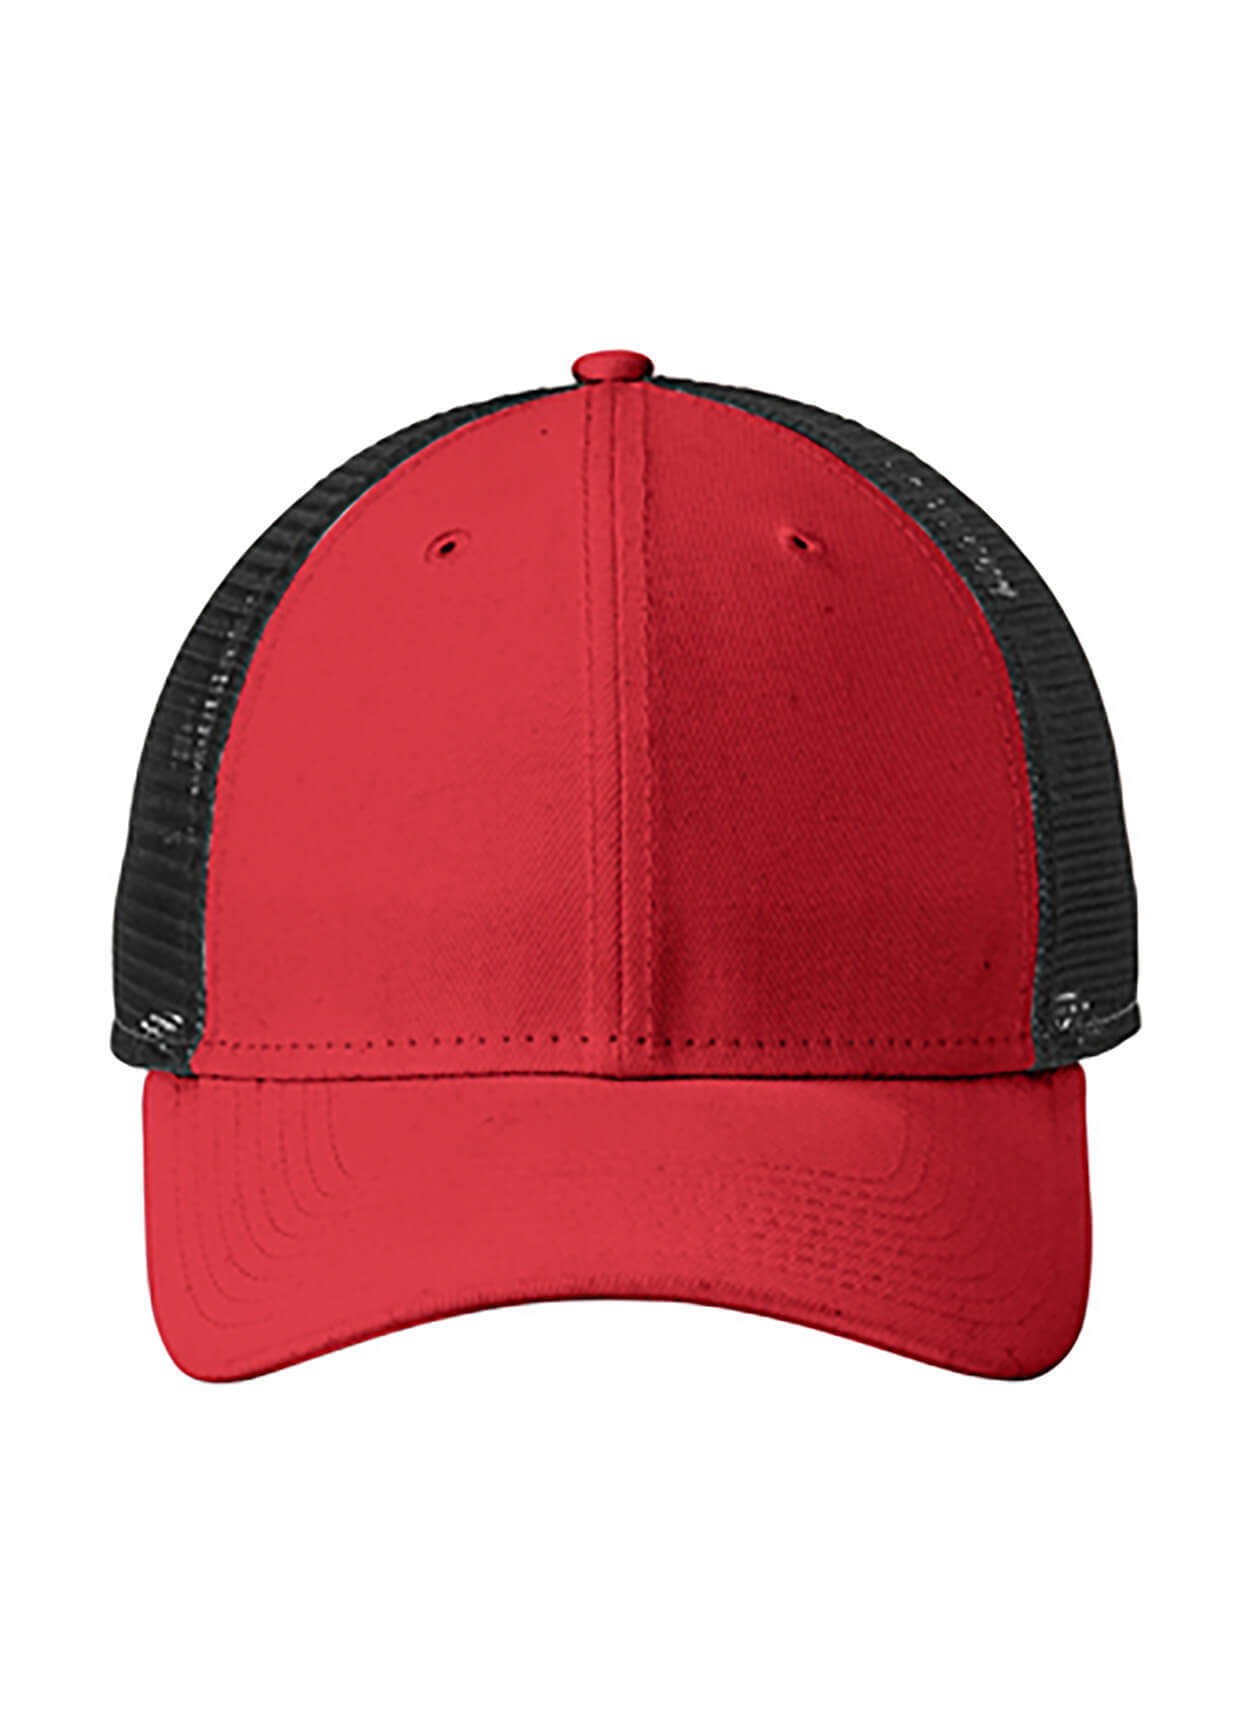 New Era Scarlet Recycled Snapback Cap